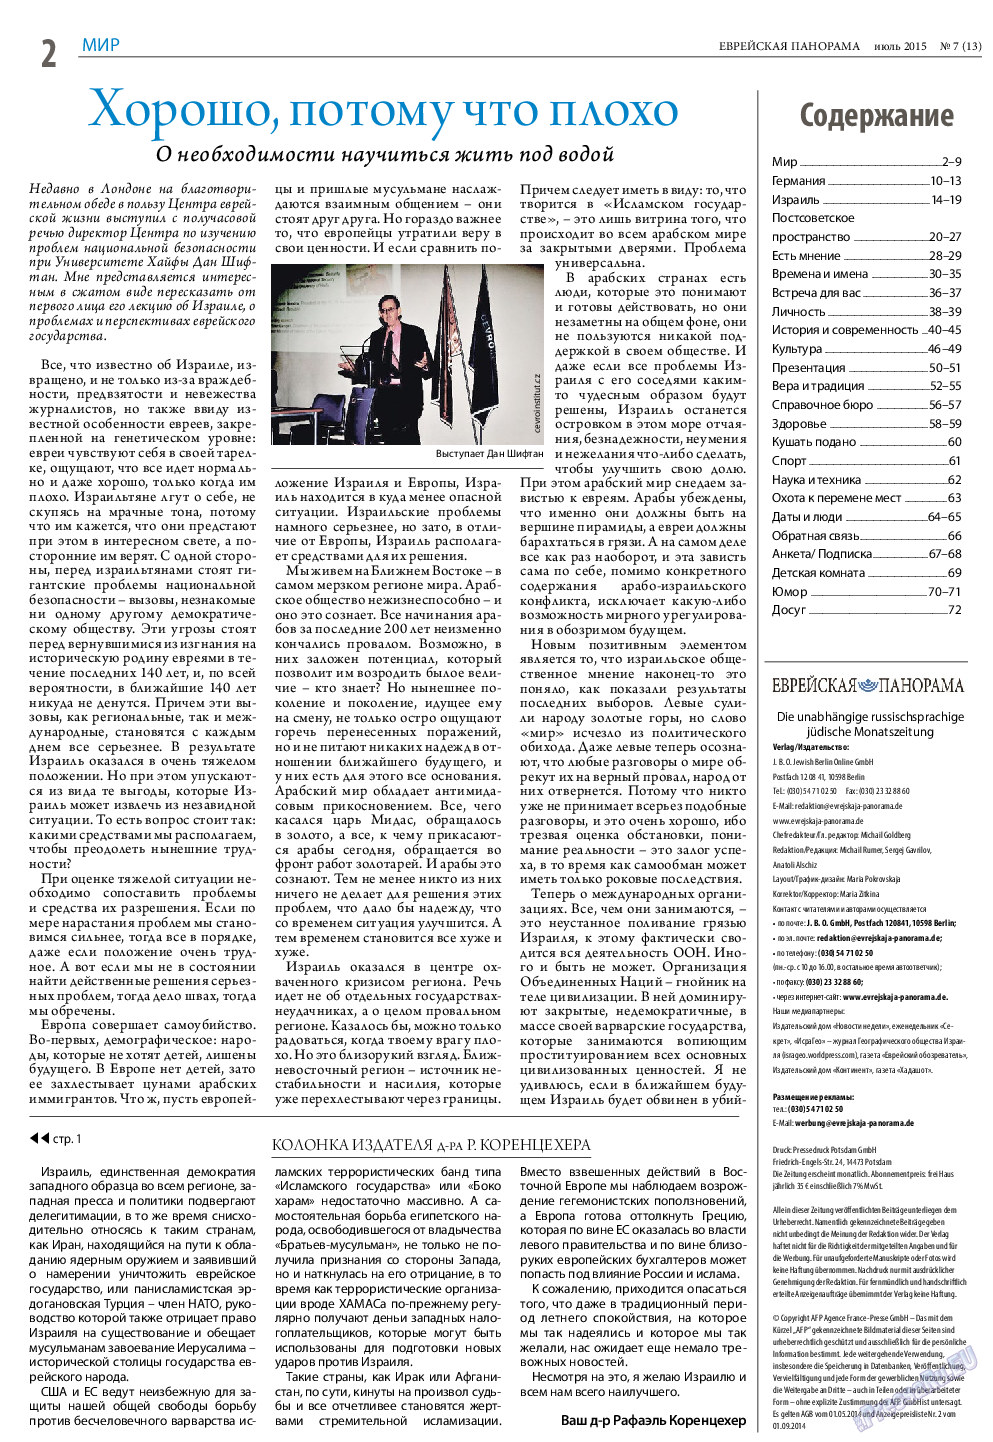 Еврейская панорама, газета. 2015 №7 стр.2